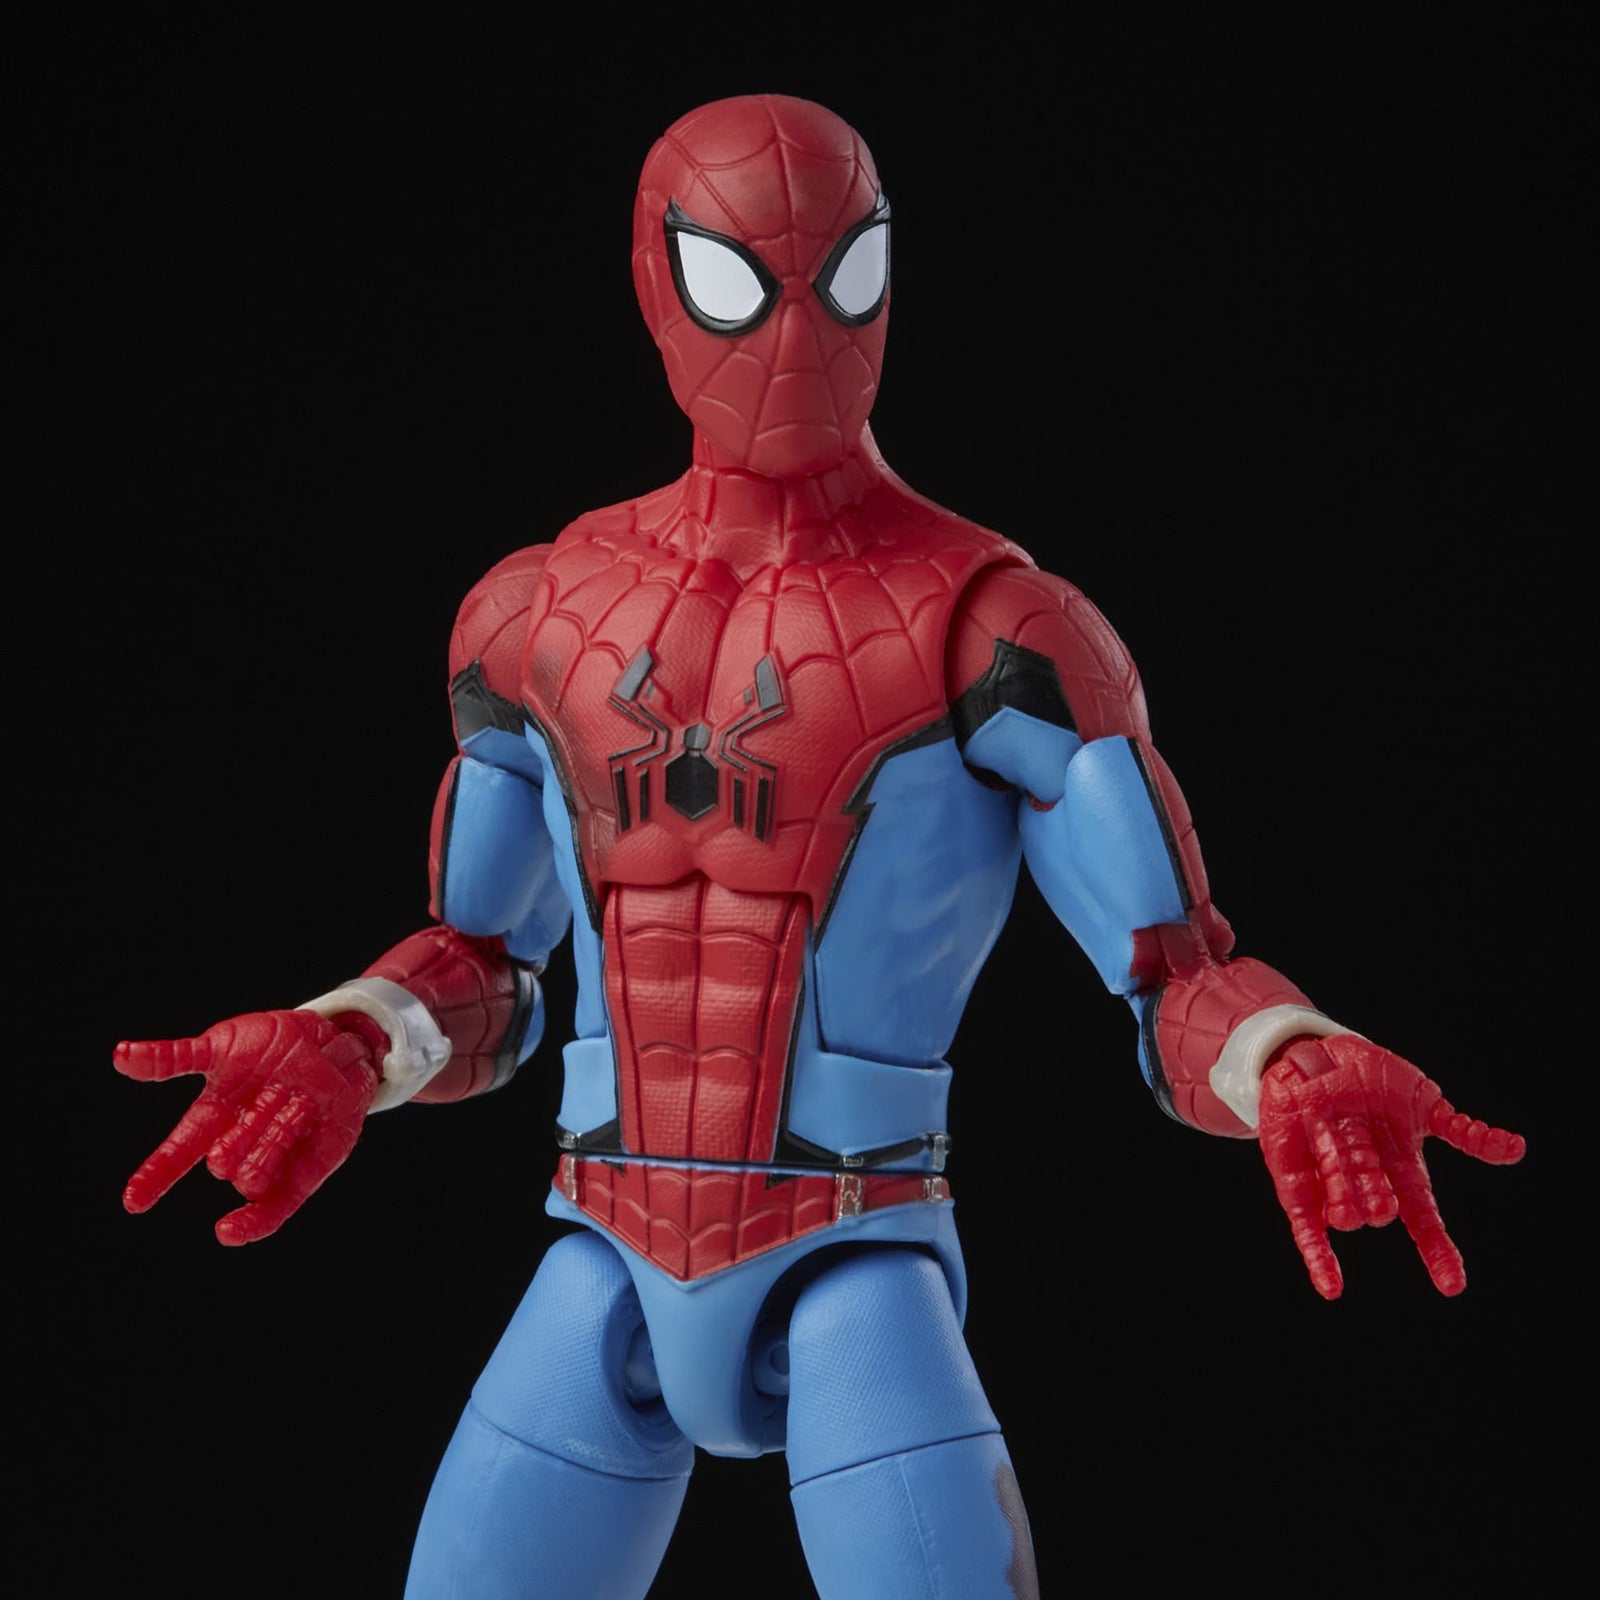 Marvel Legends Series 6-inch Scale Action Figure Toy Zombie Hunter Spidey, Premium Design, 1 Figure, 3 Accessories, and Build-a-Figure Part